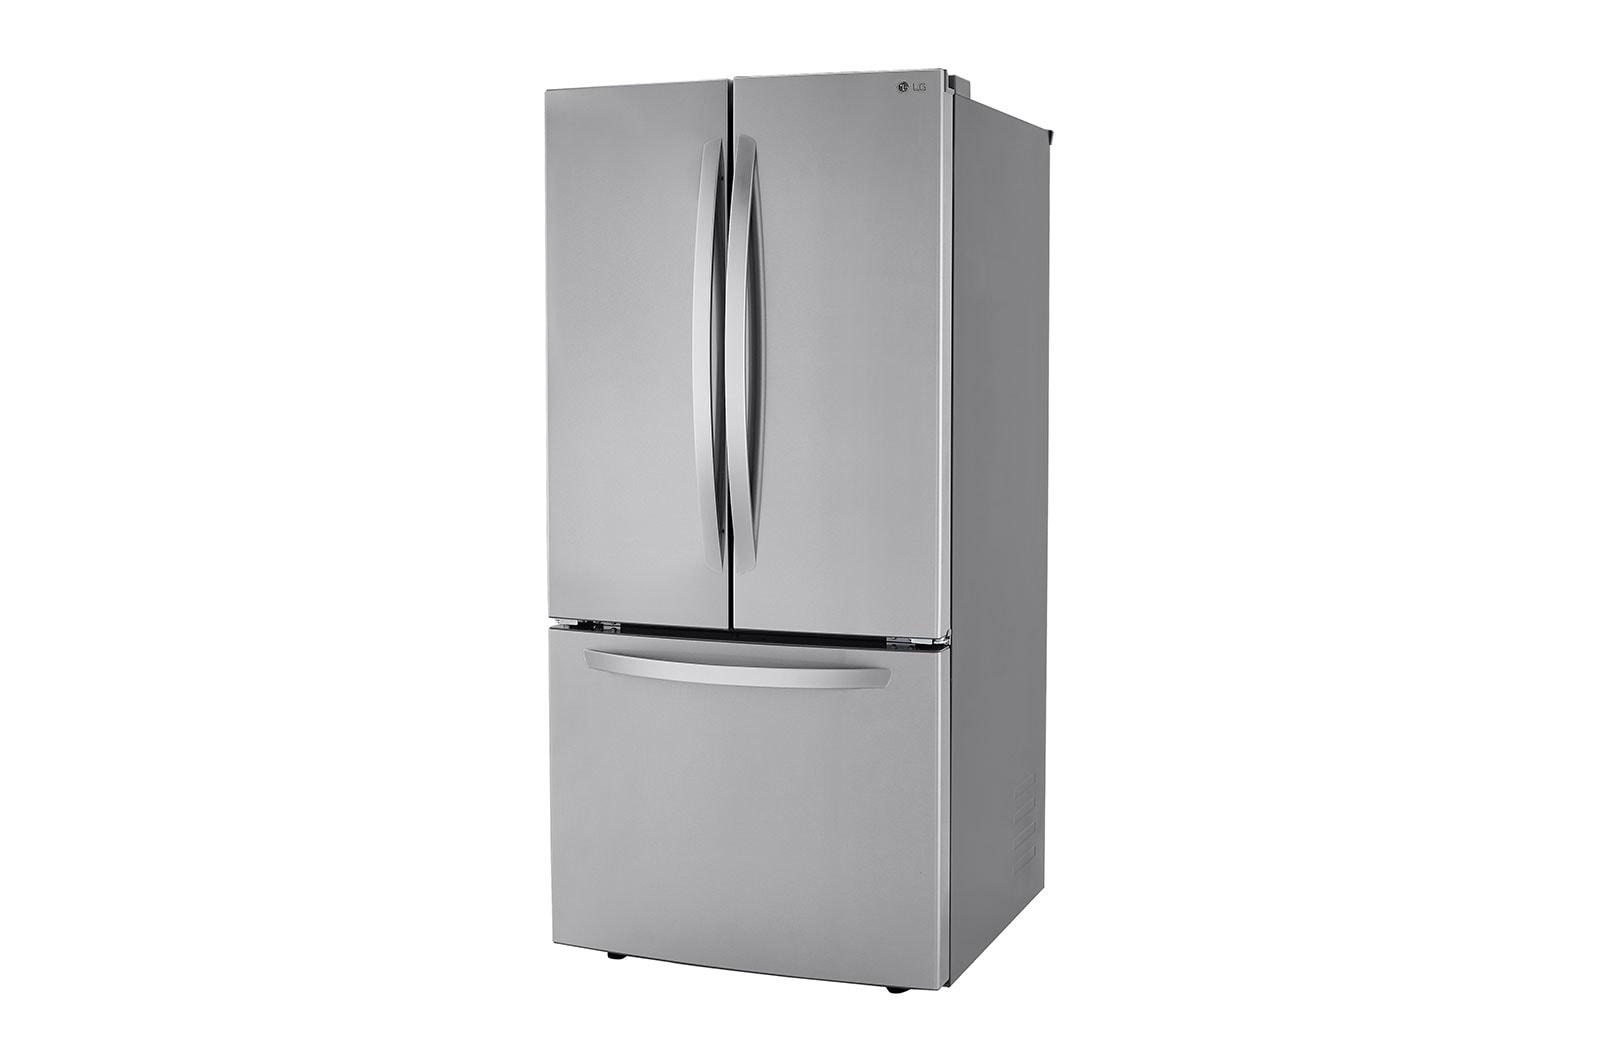 Lg 25 cu. ft. French Door Refrigerator